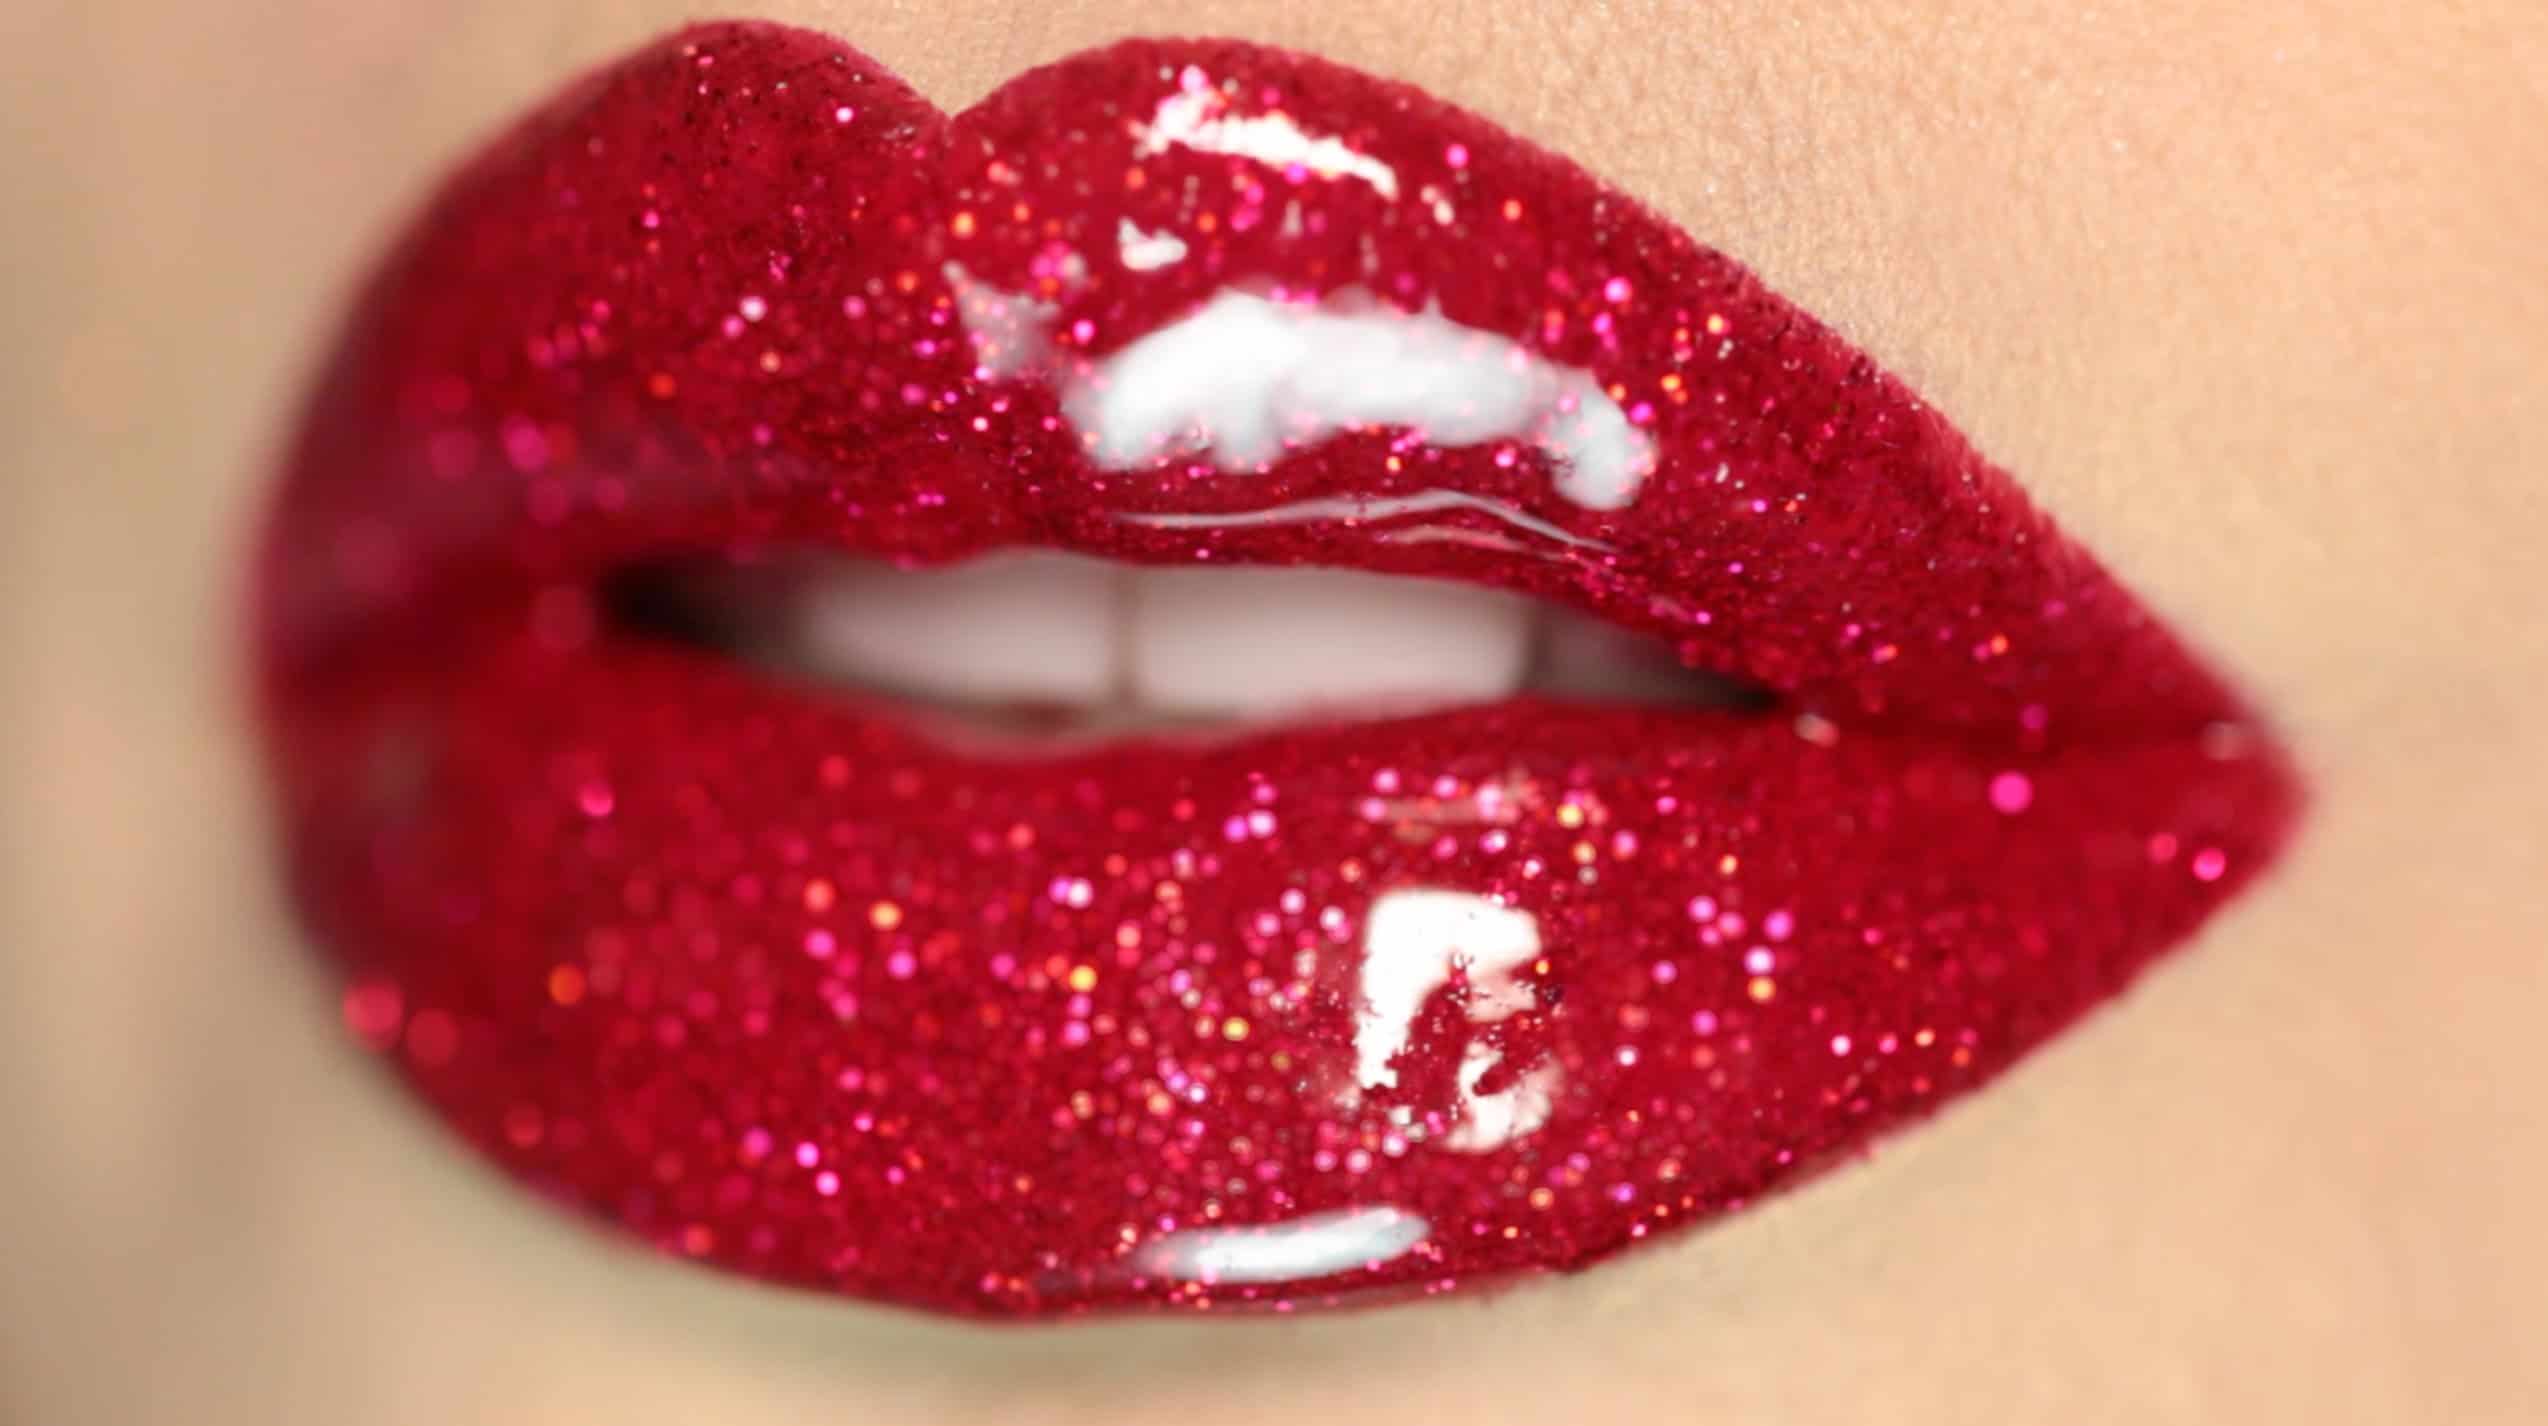 Bright red glitter lips